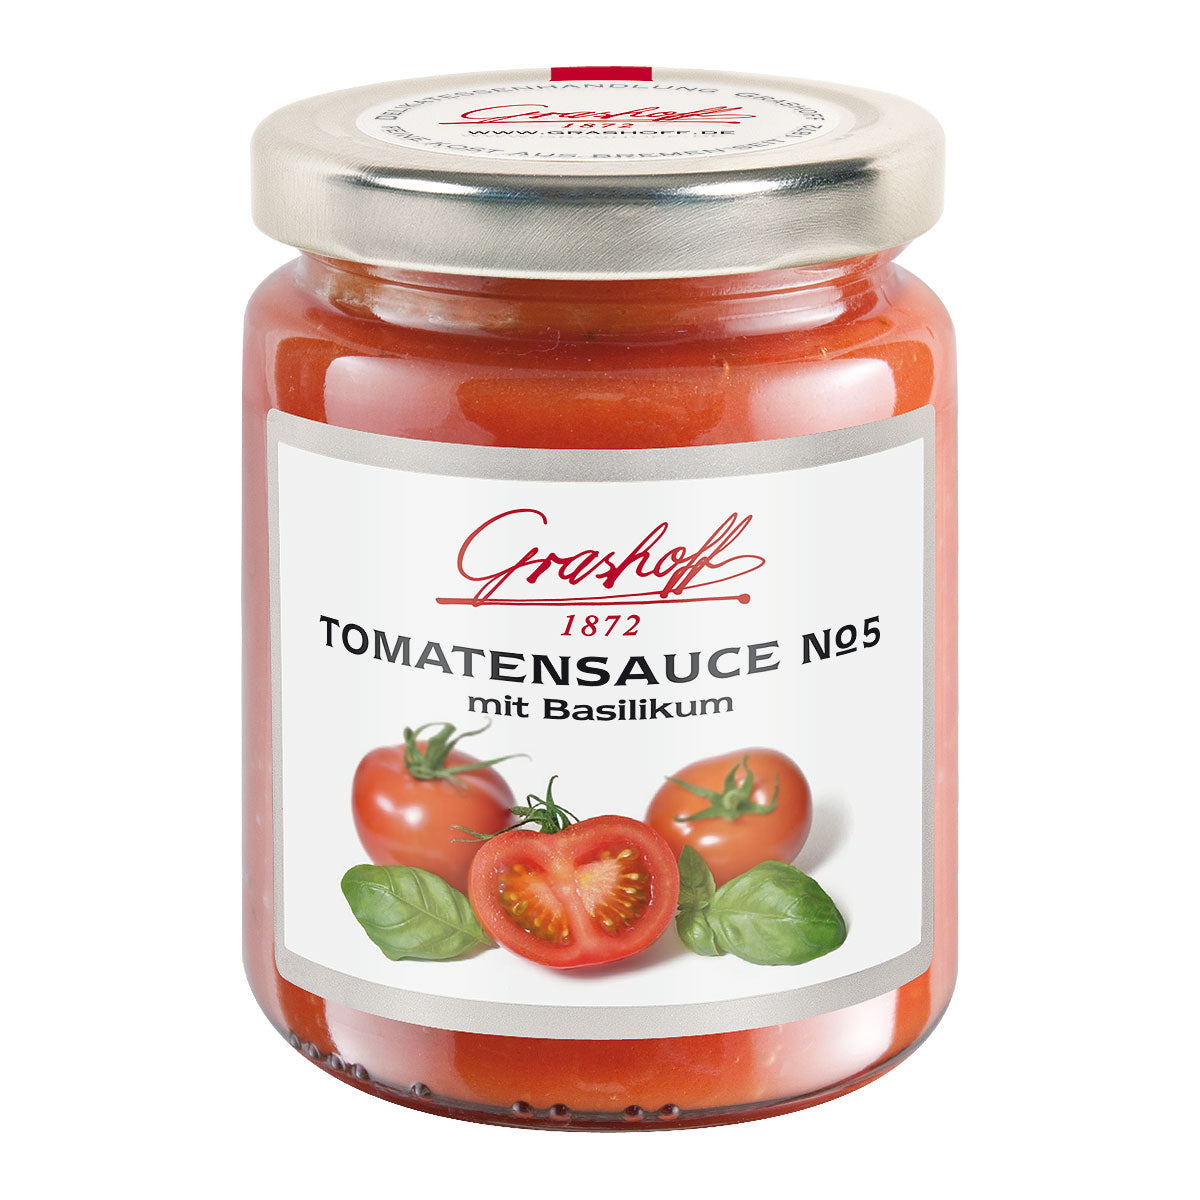 Tomato sauce No 5